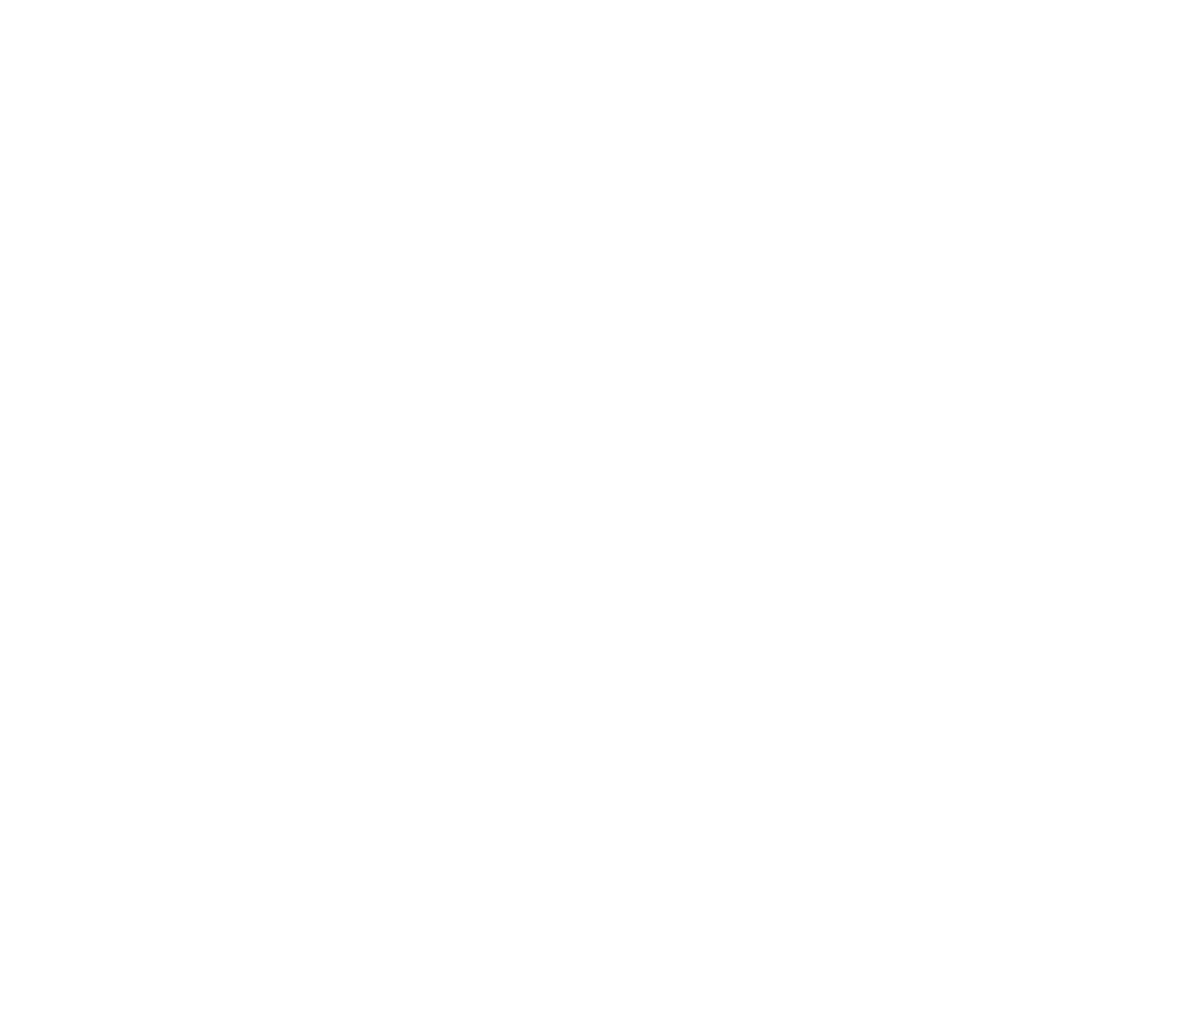 California restaurant show logo white